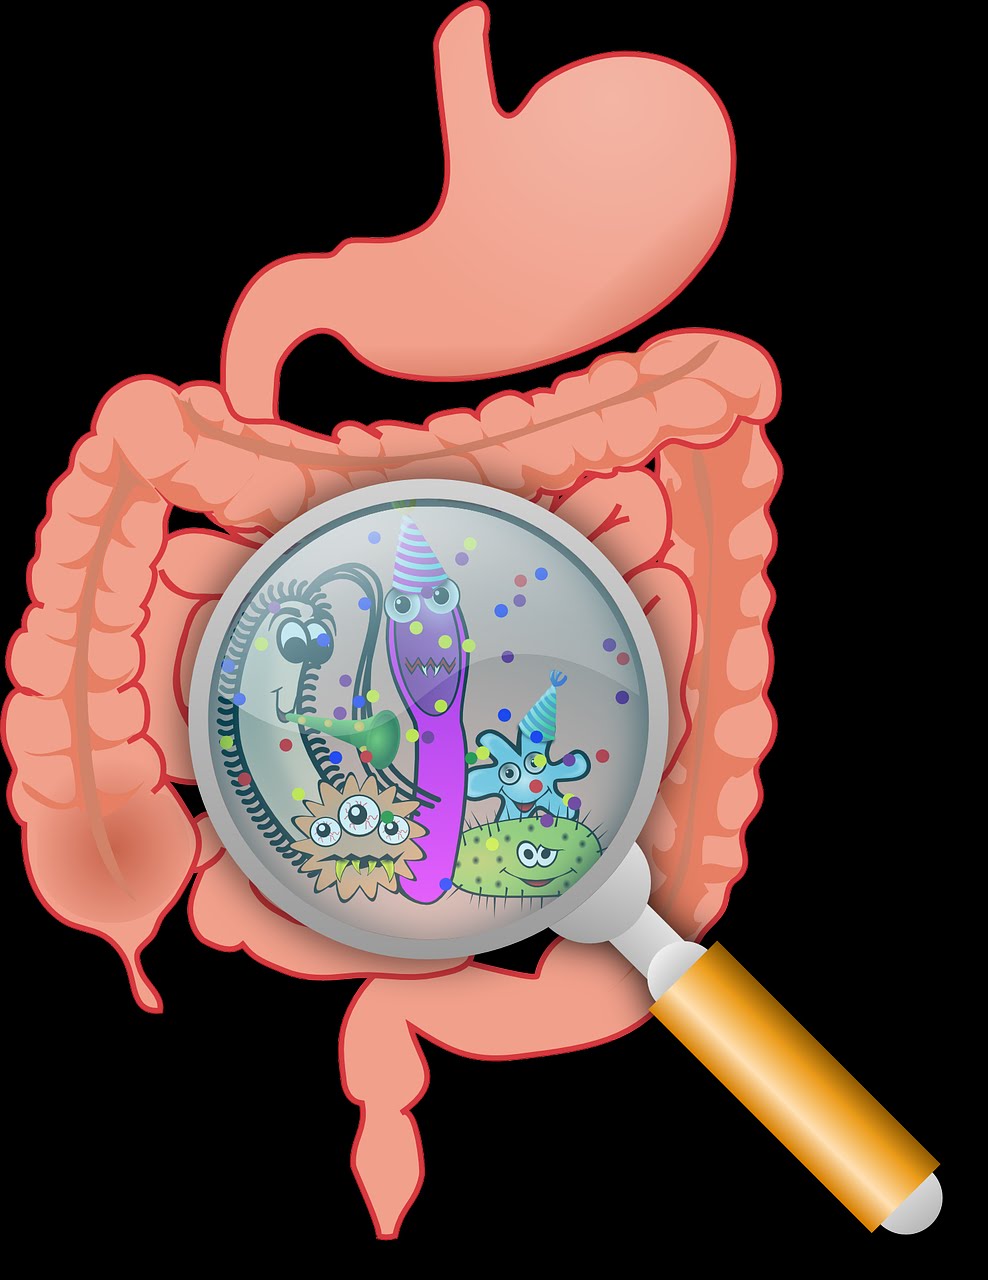 Diarrhea - Symptoms, Cause & Treatment